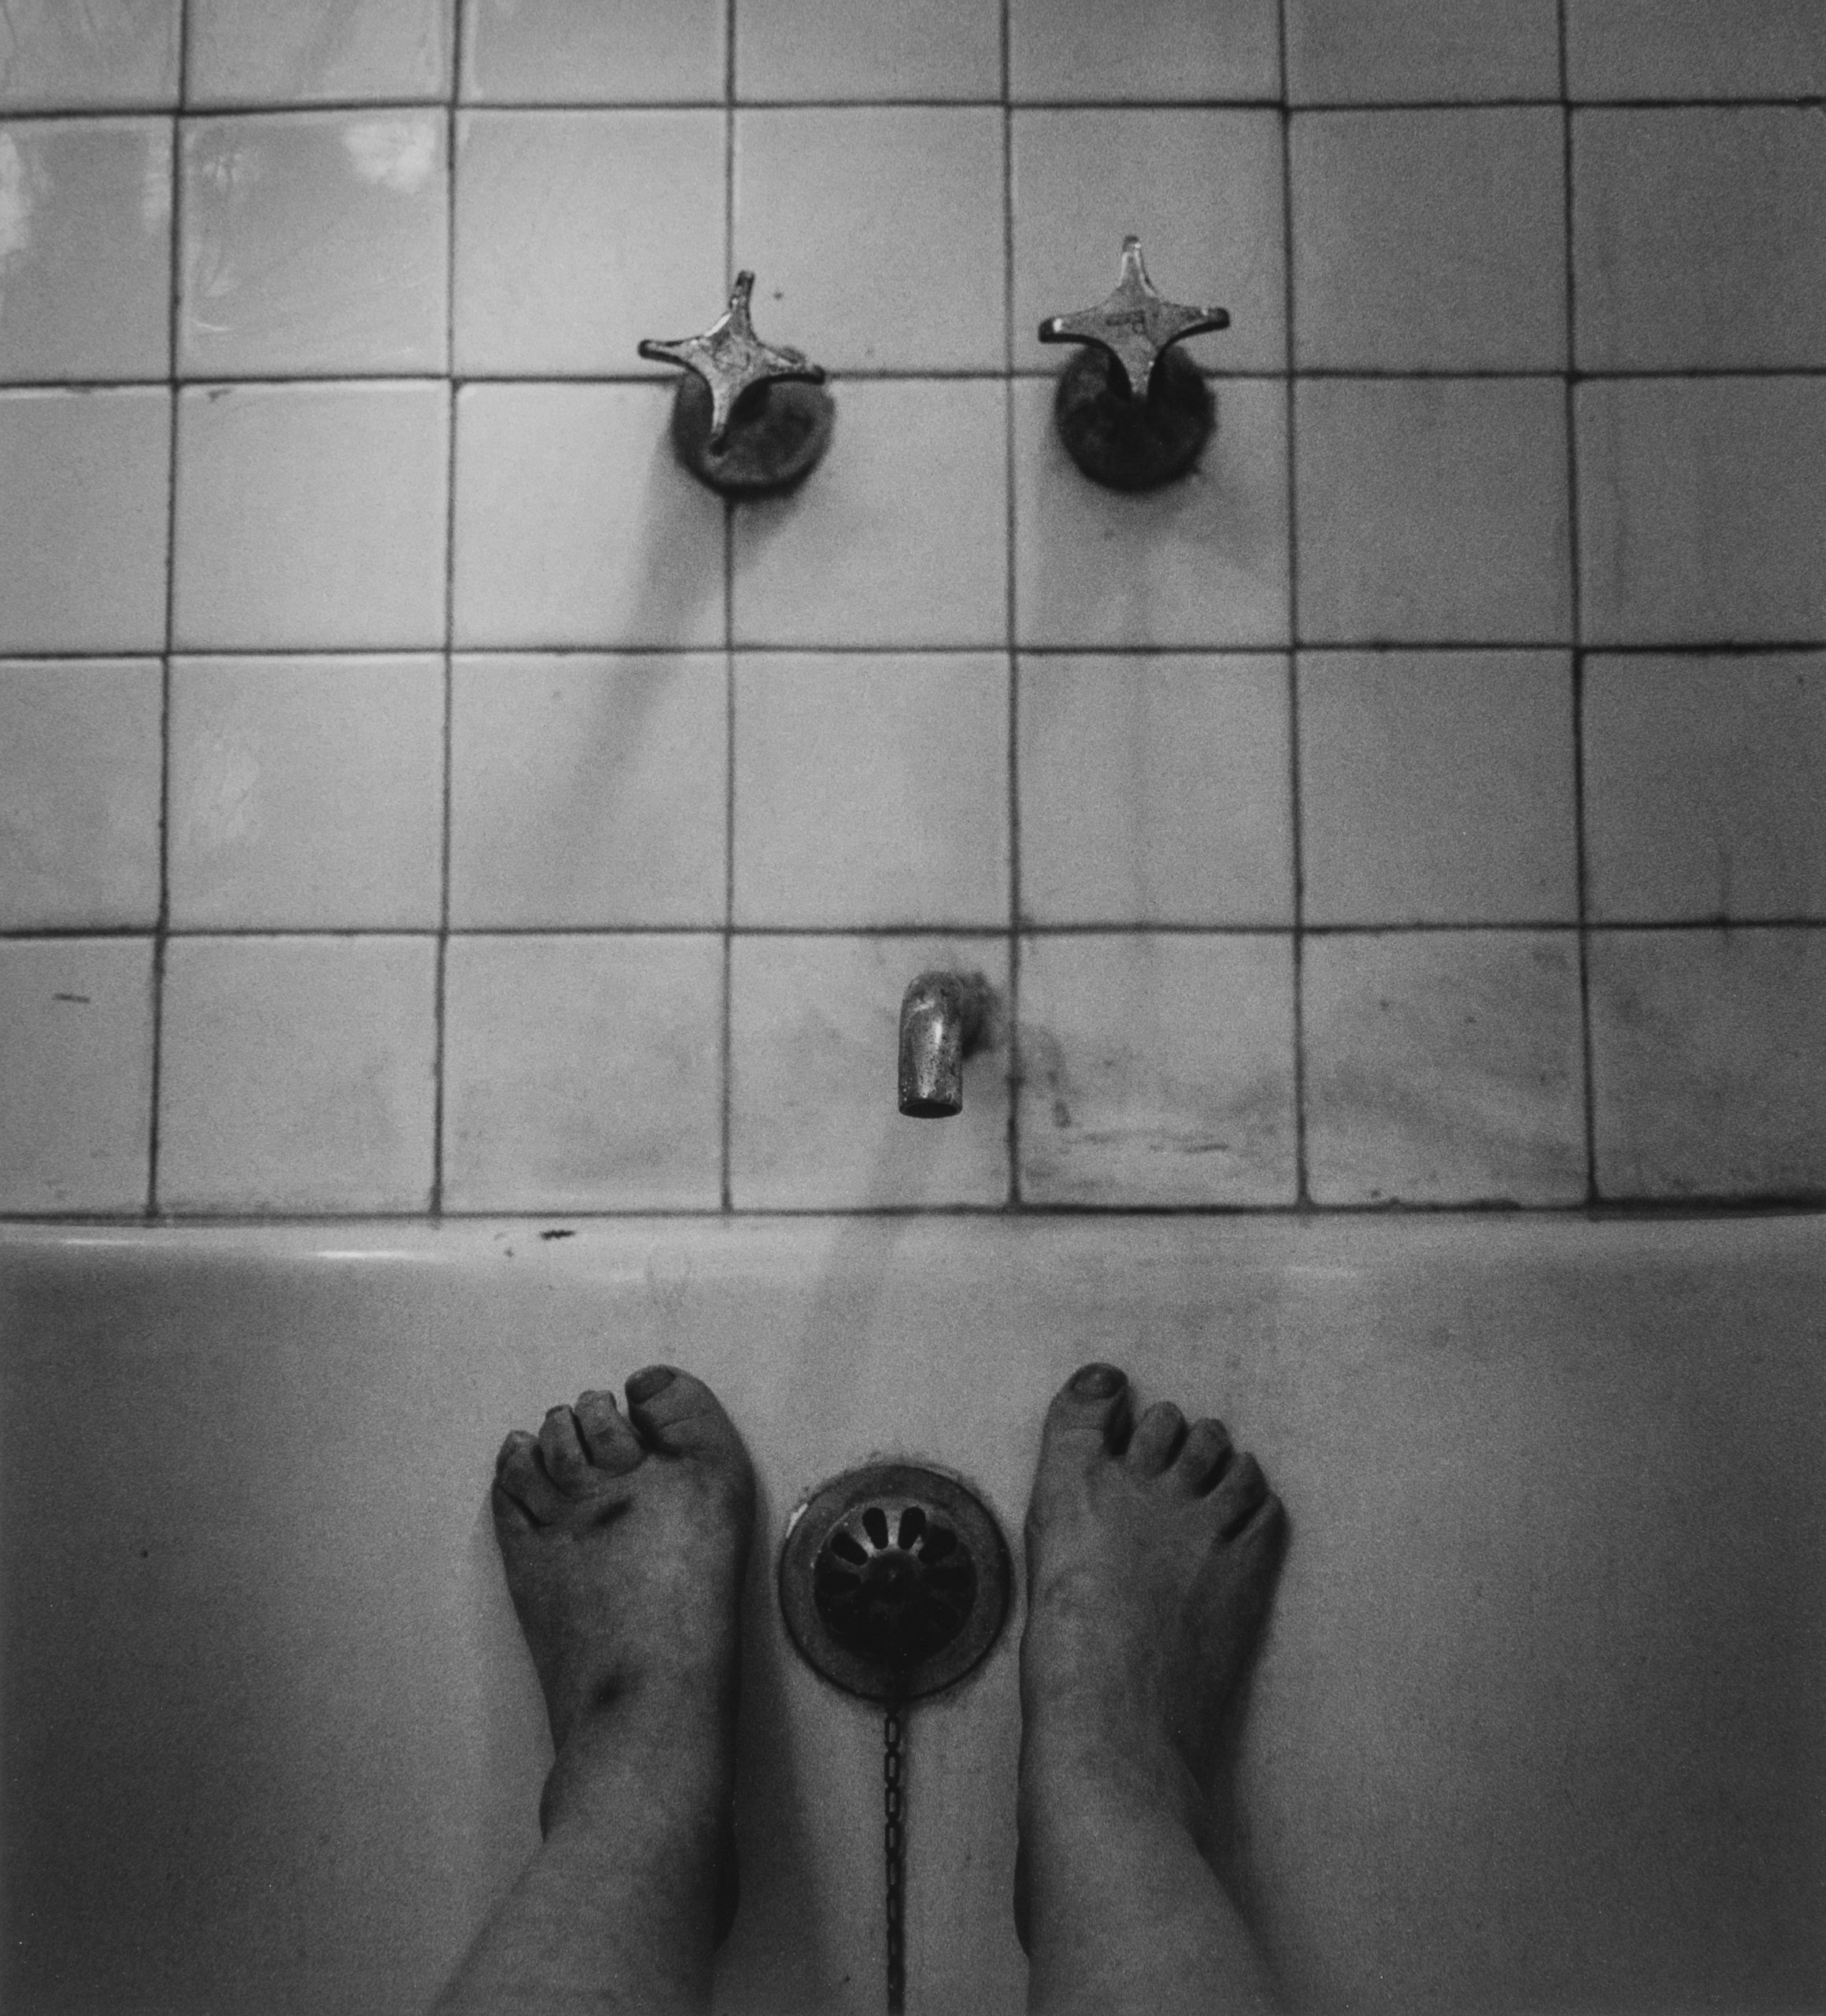 El Baño de Frida [Frida's Bathroom] , Coyoacán, Mexico City, 2005